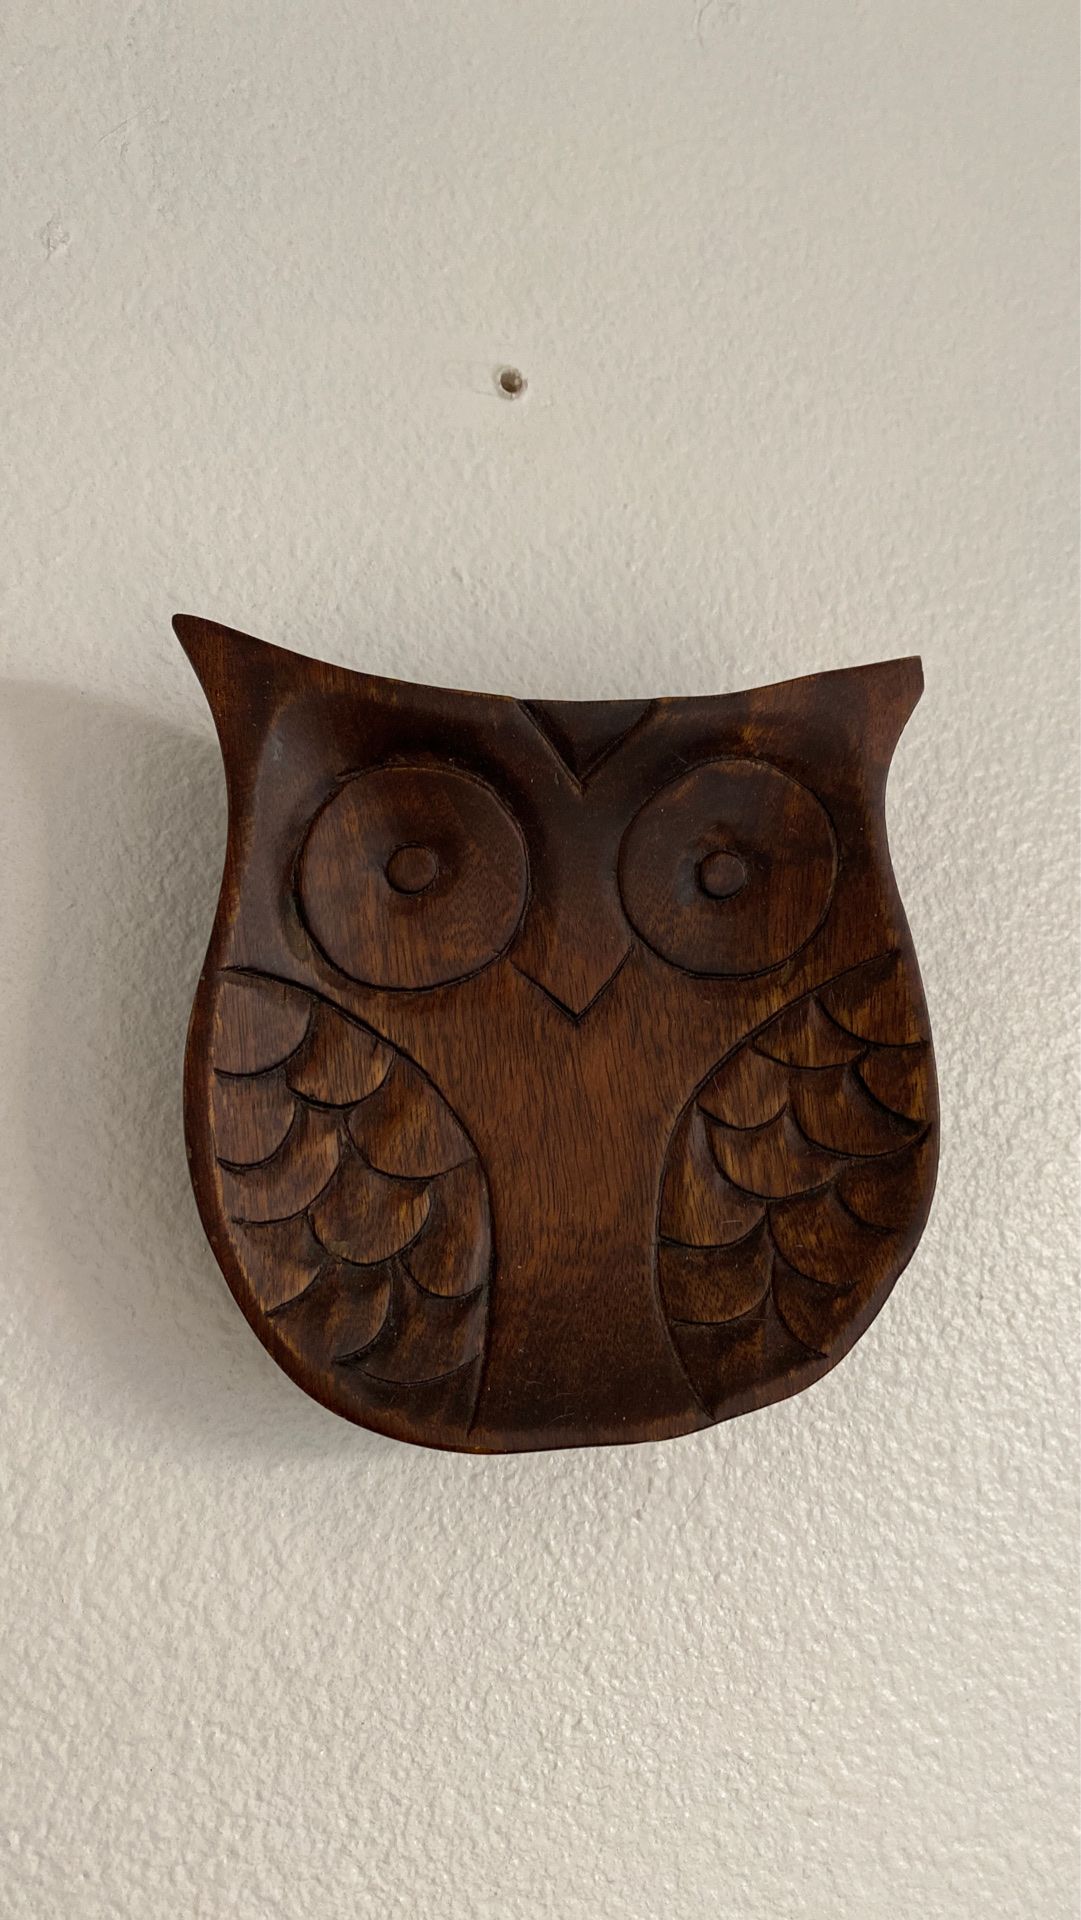 Hanging Wooden Owl